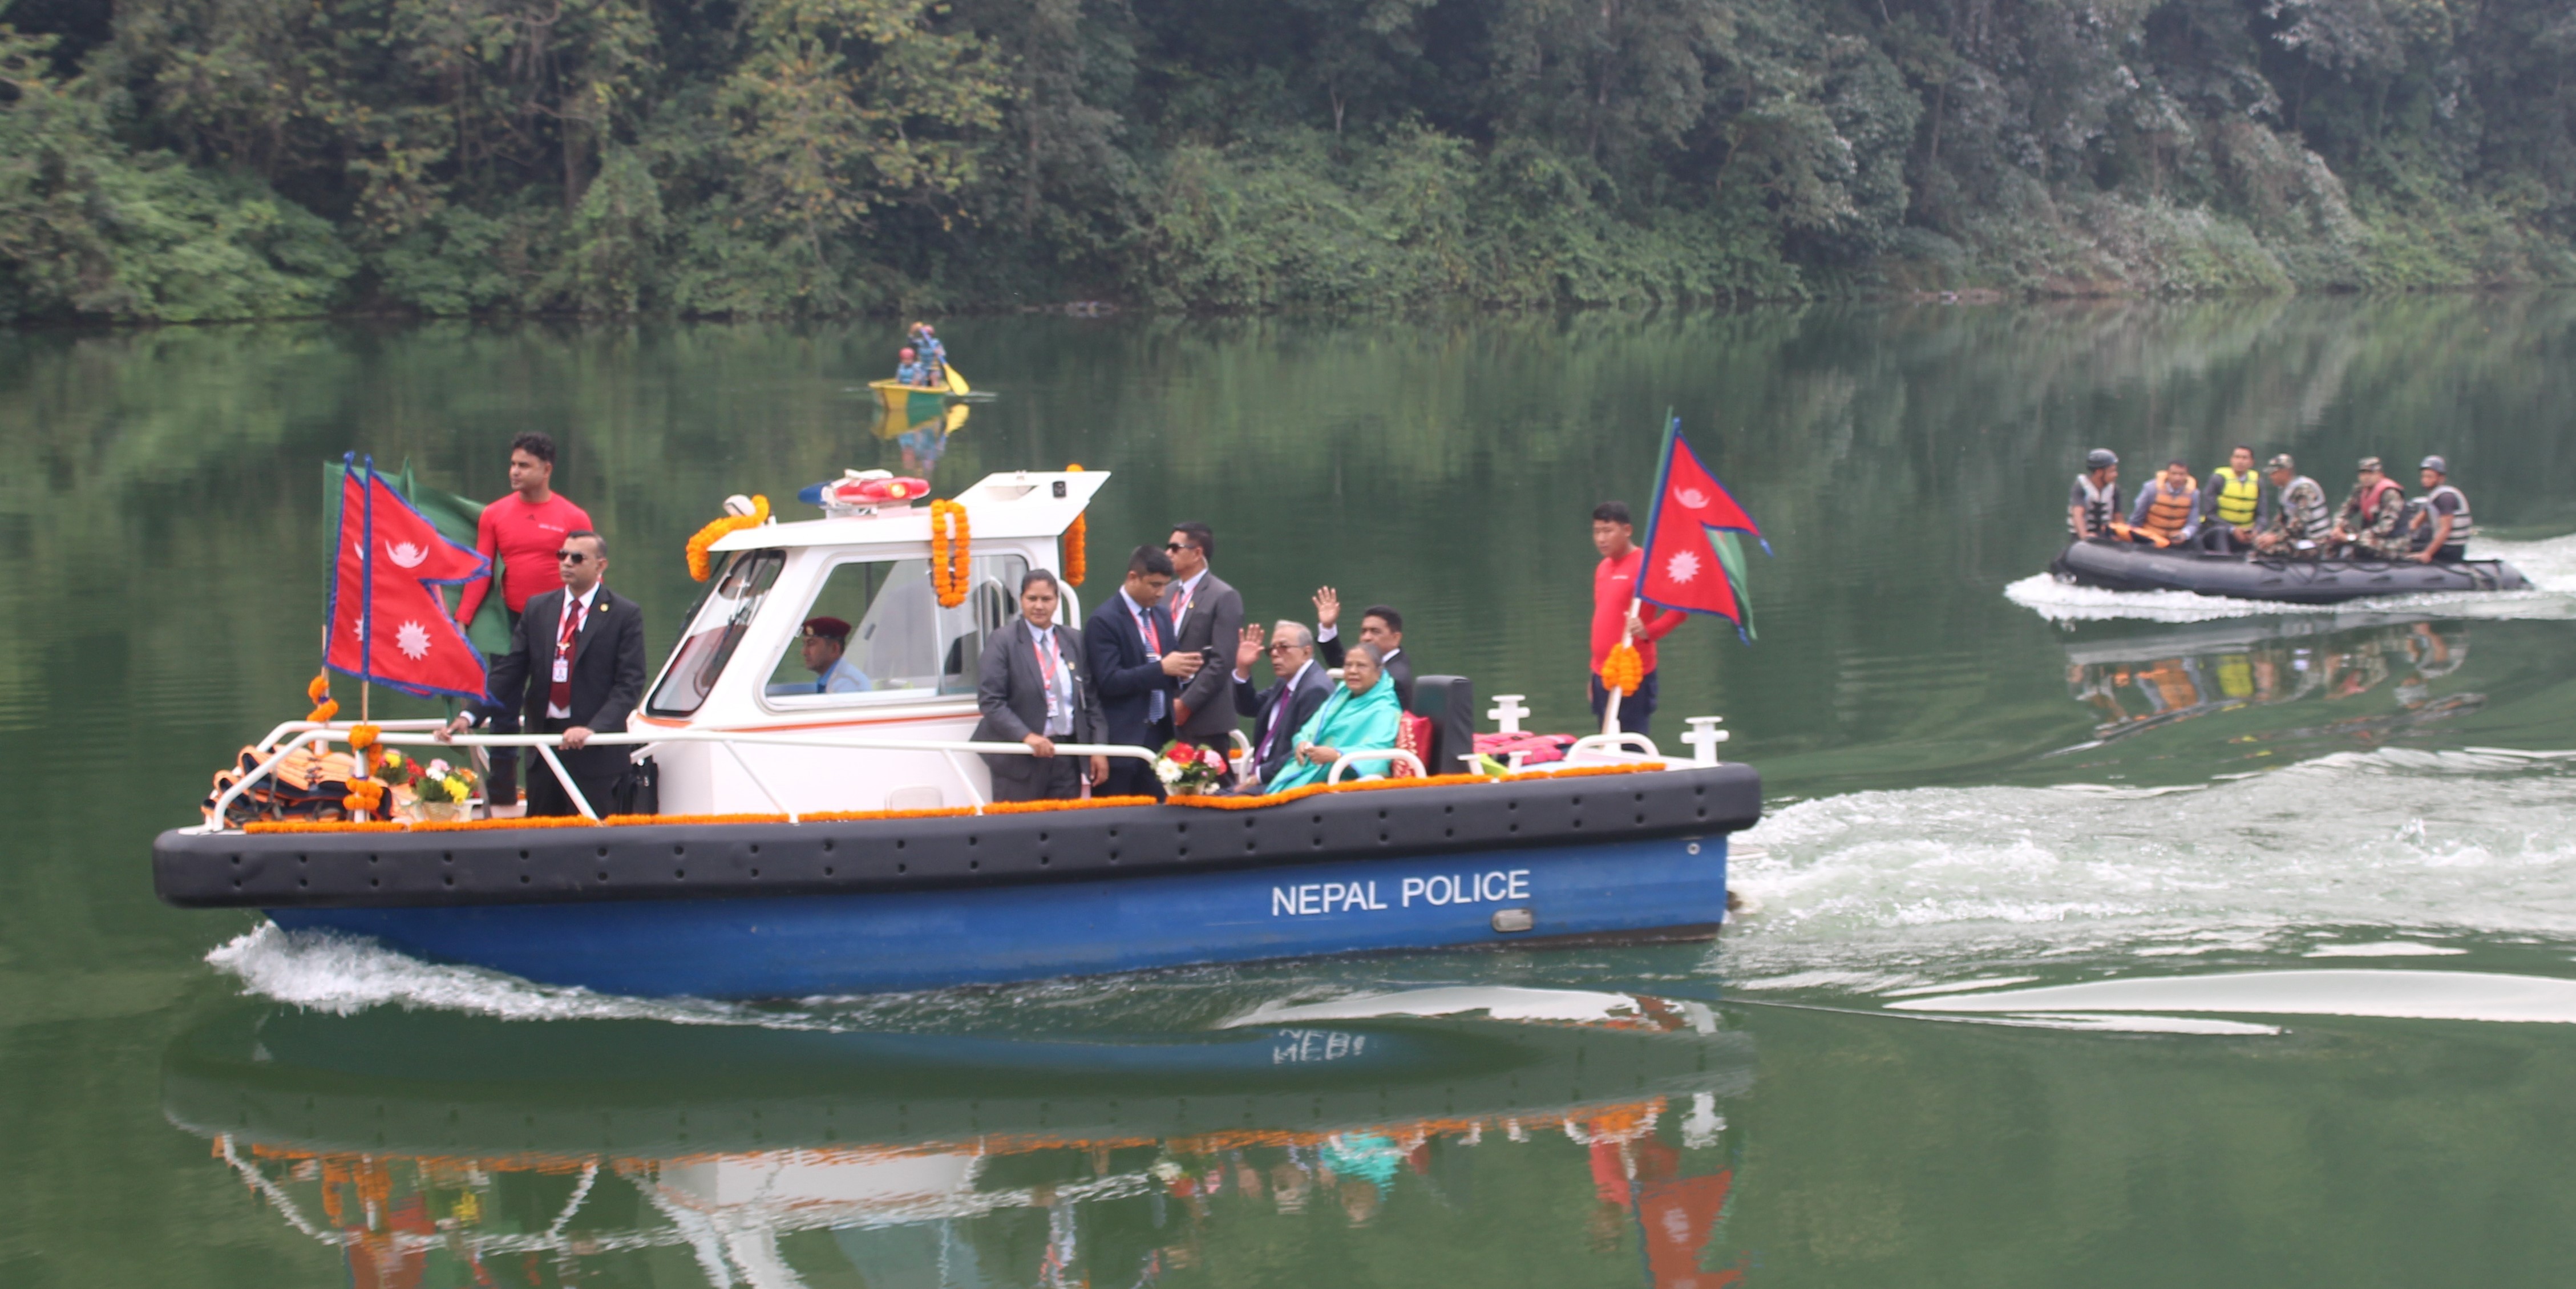 bangladesh-president-hamid-is-enjoying-boat-ride-on-fewa-lake-in-pokhara-on-thursday